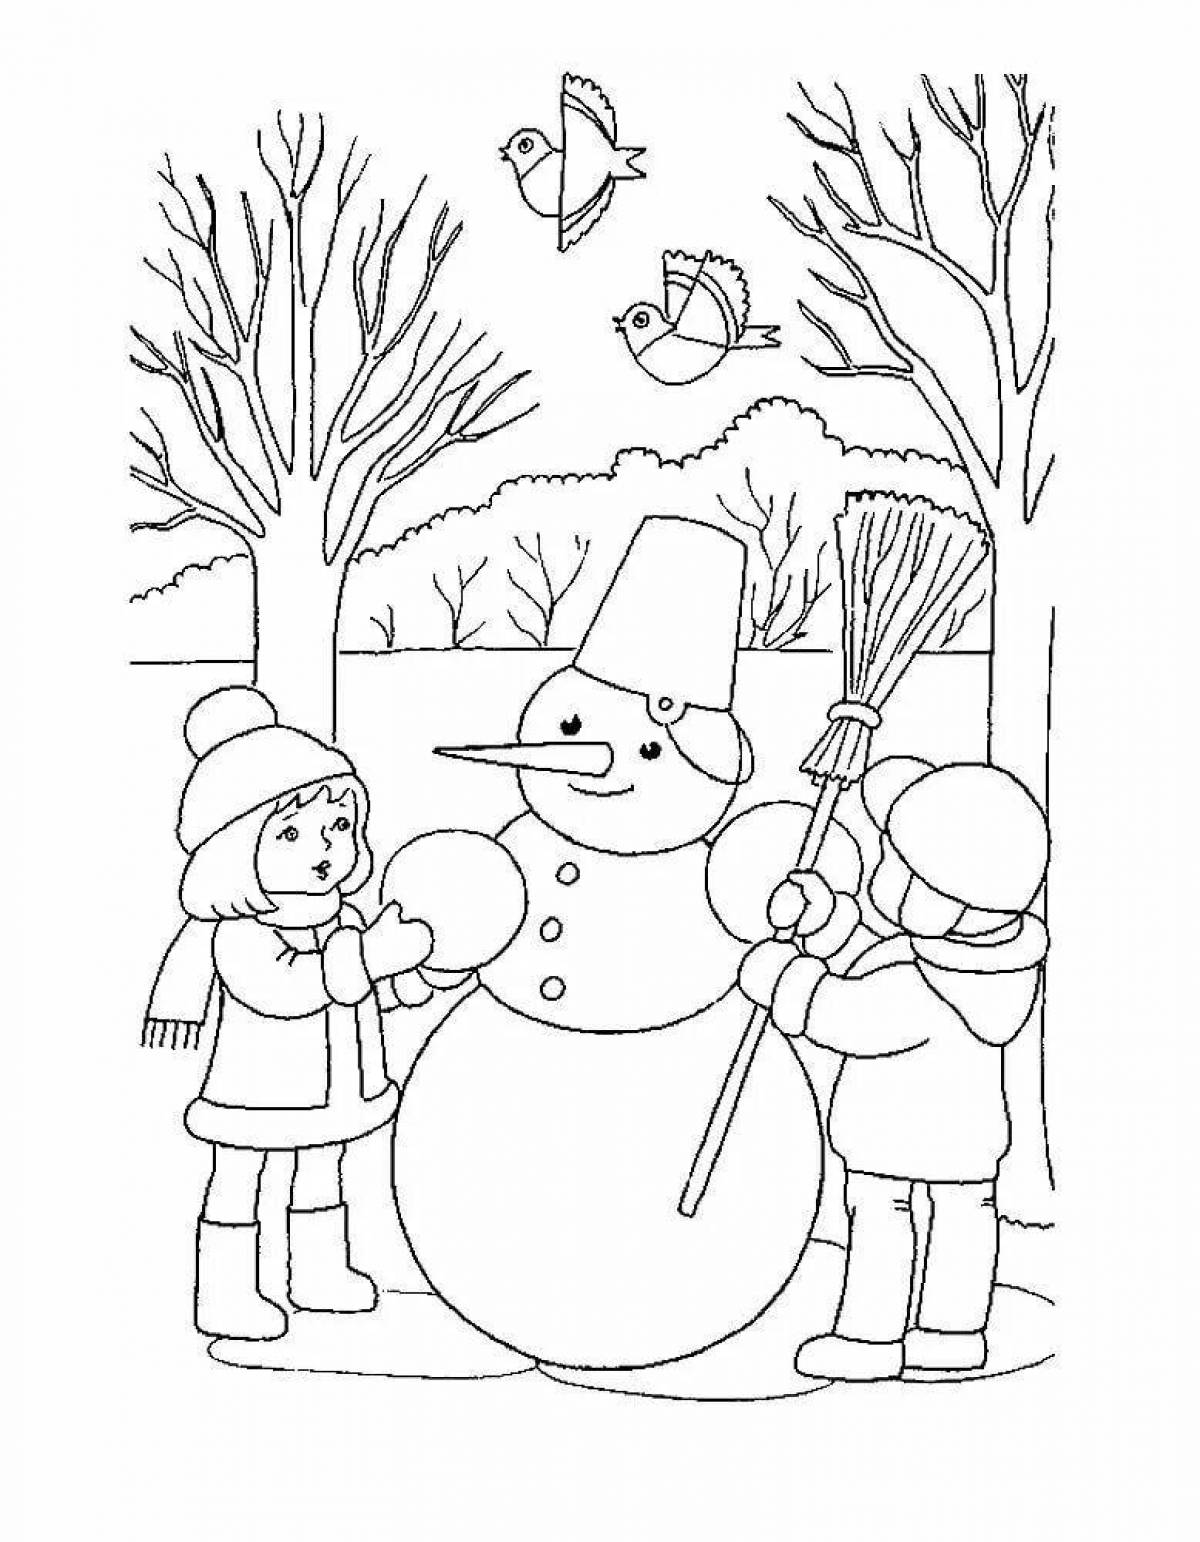 Delightful postman snowman coloring book